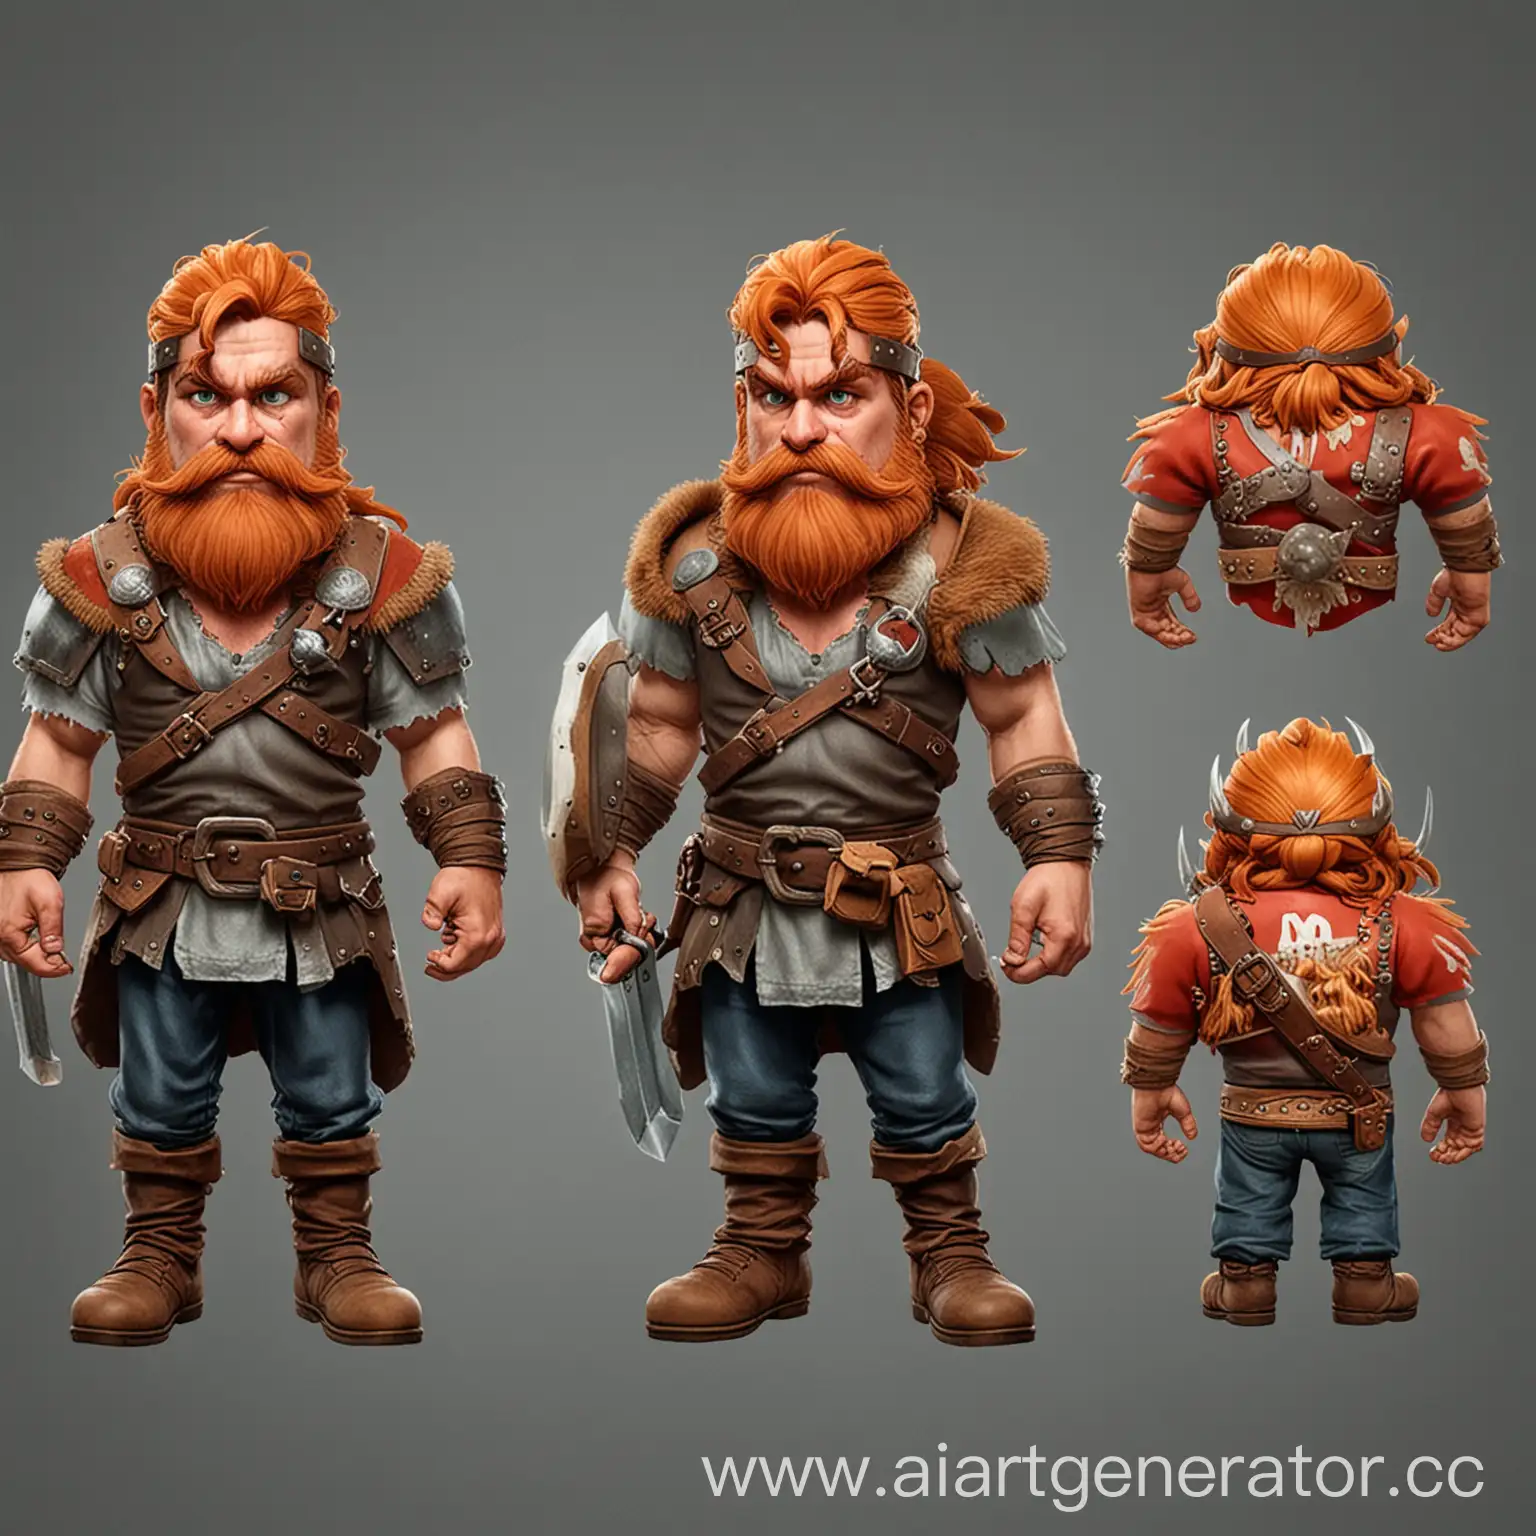 Dynamic-Viking-Warrior-Sprite-Character-for-2D-Game-Design